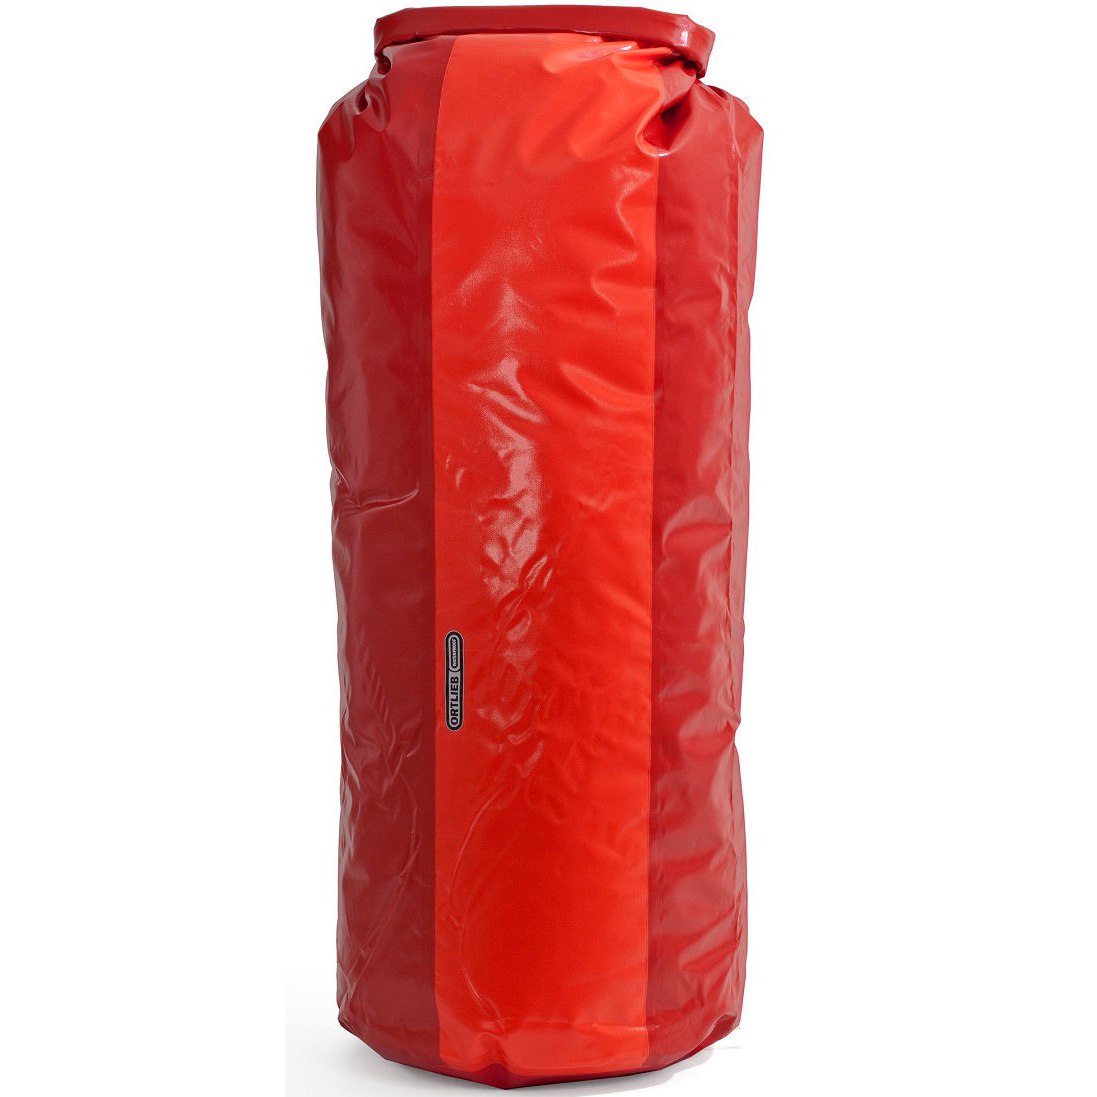 Bild von ORTLIEB Dry-Bag PD350 - 79L Packsack - cranberry-signal red